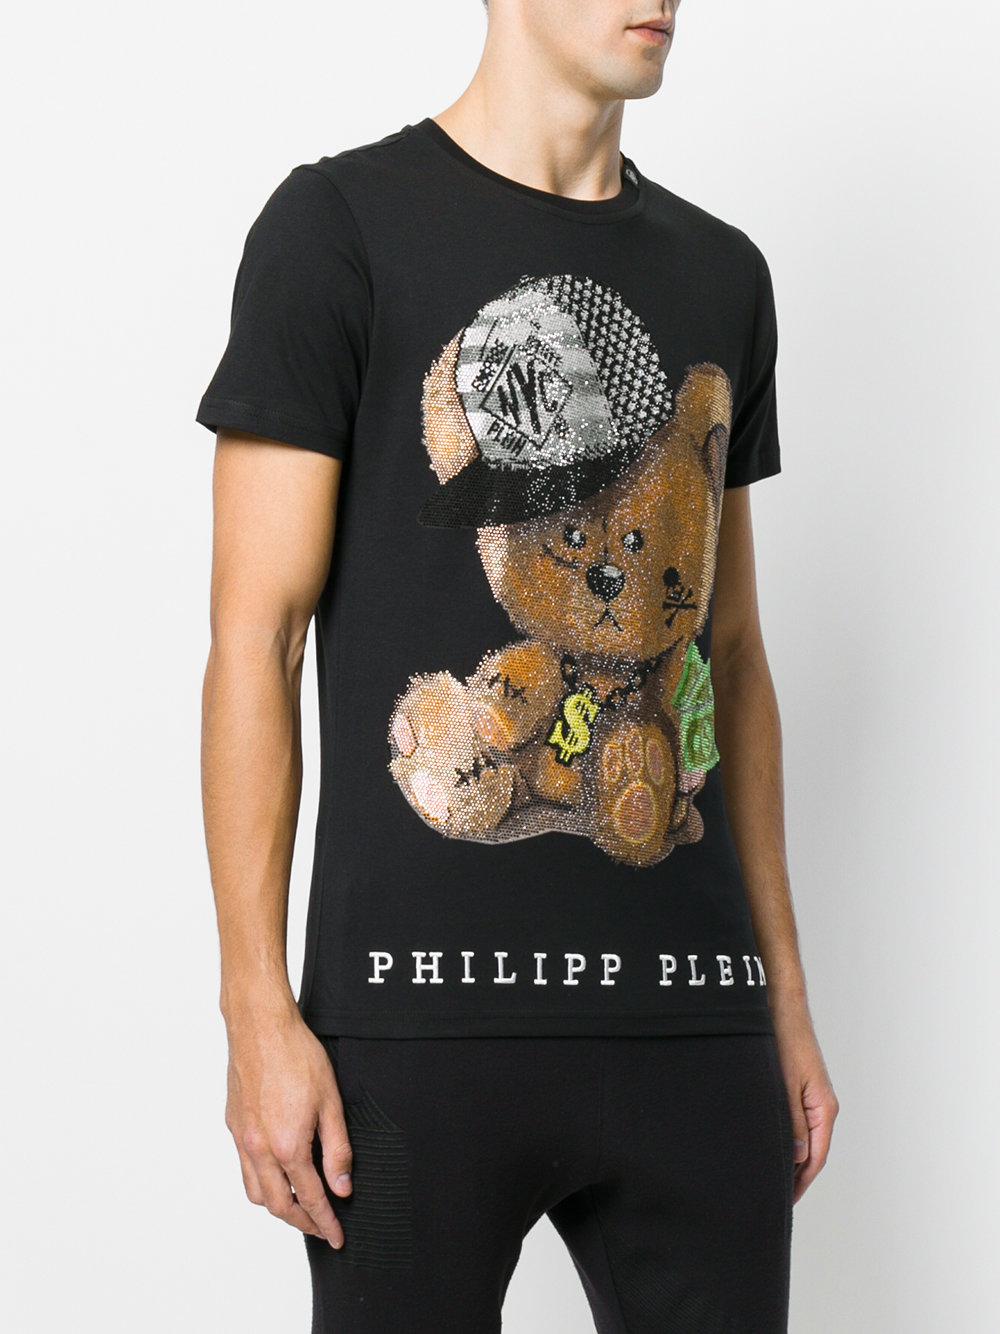 Philipp Plein Cotton Bear Print T-shirt in Black for Men - Lyst